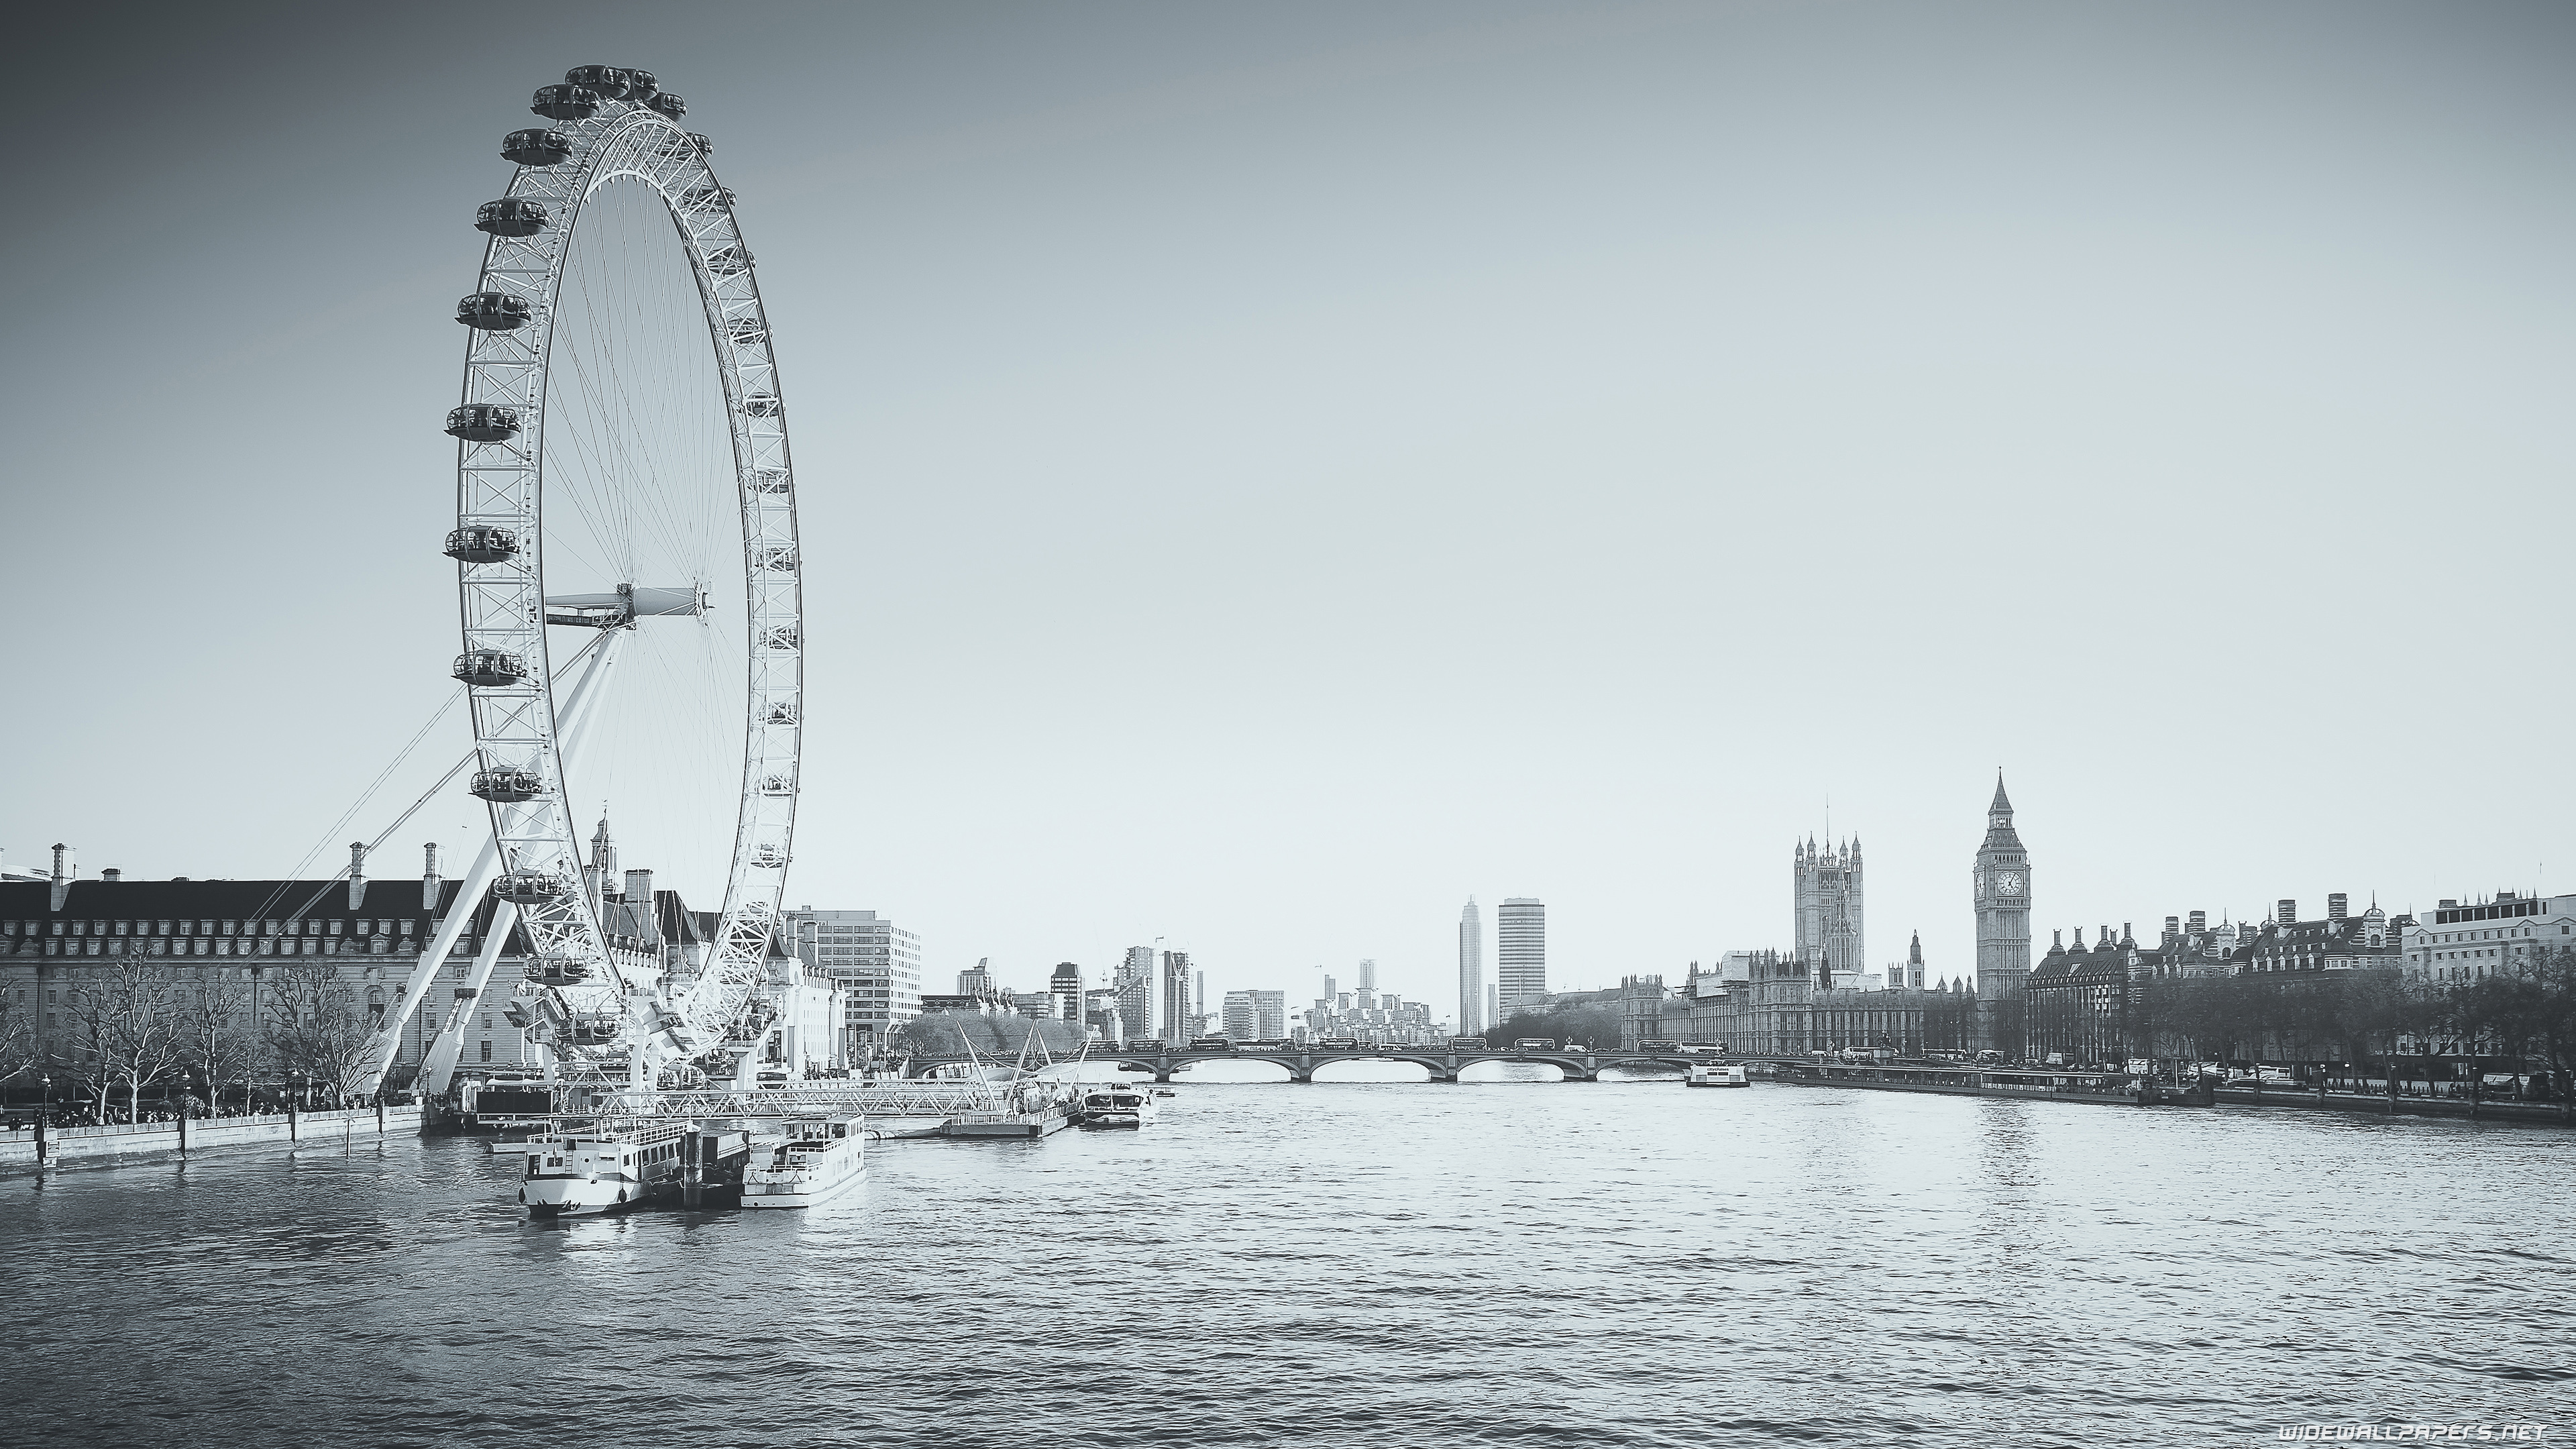 London Eye, City desktop wallpapers, 4K Ultra HD, High quality, 3840x2160 4K Desktop